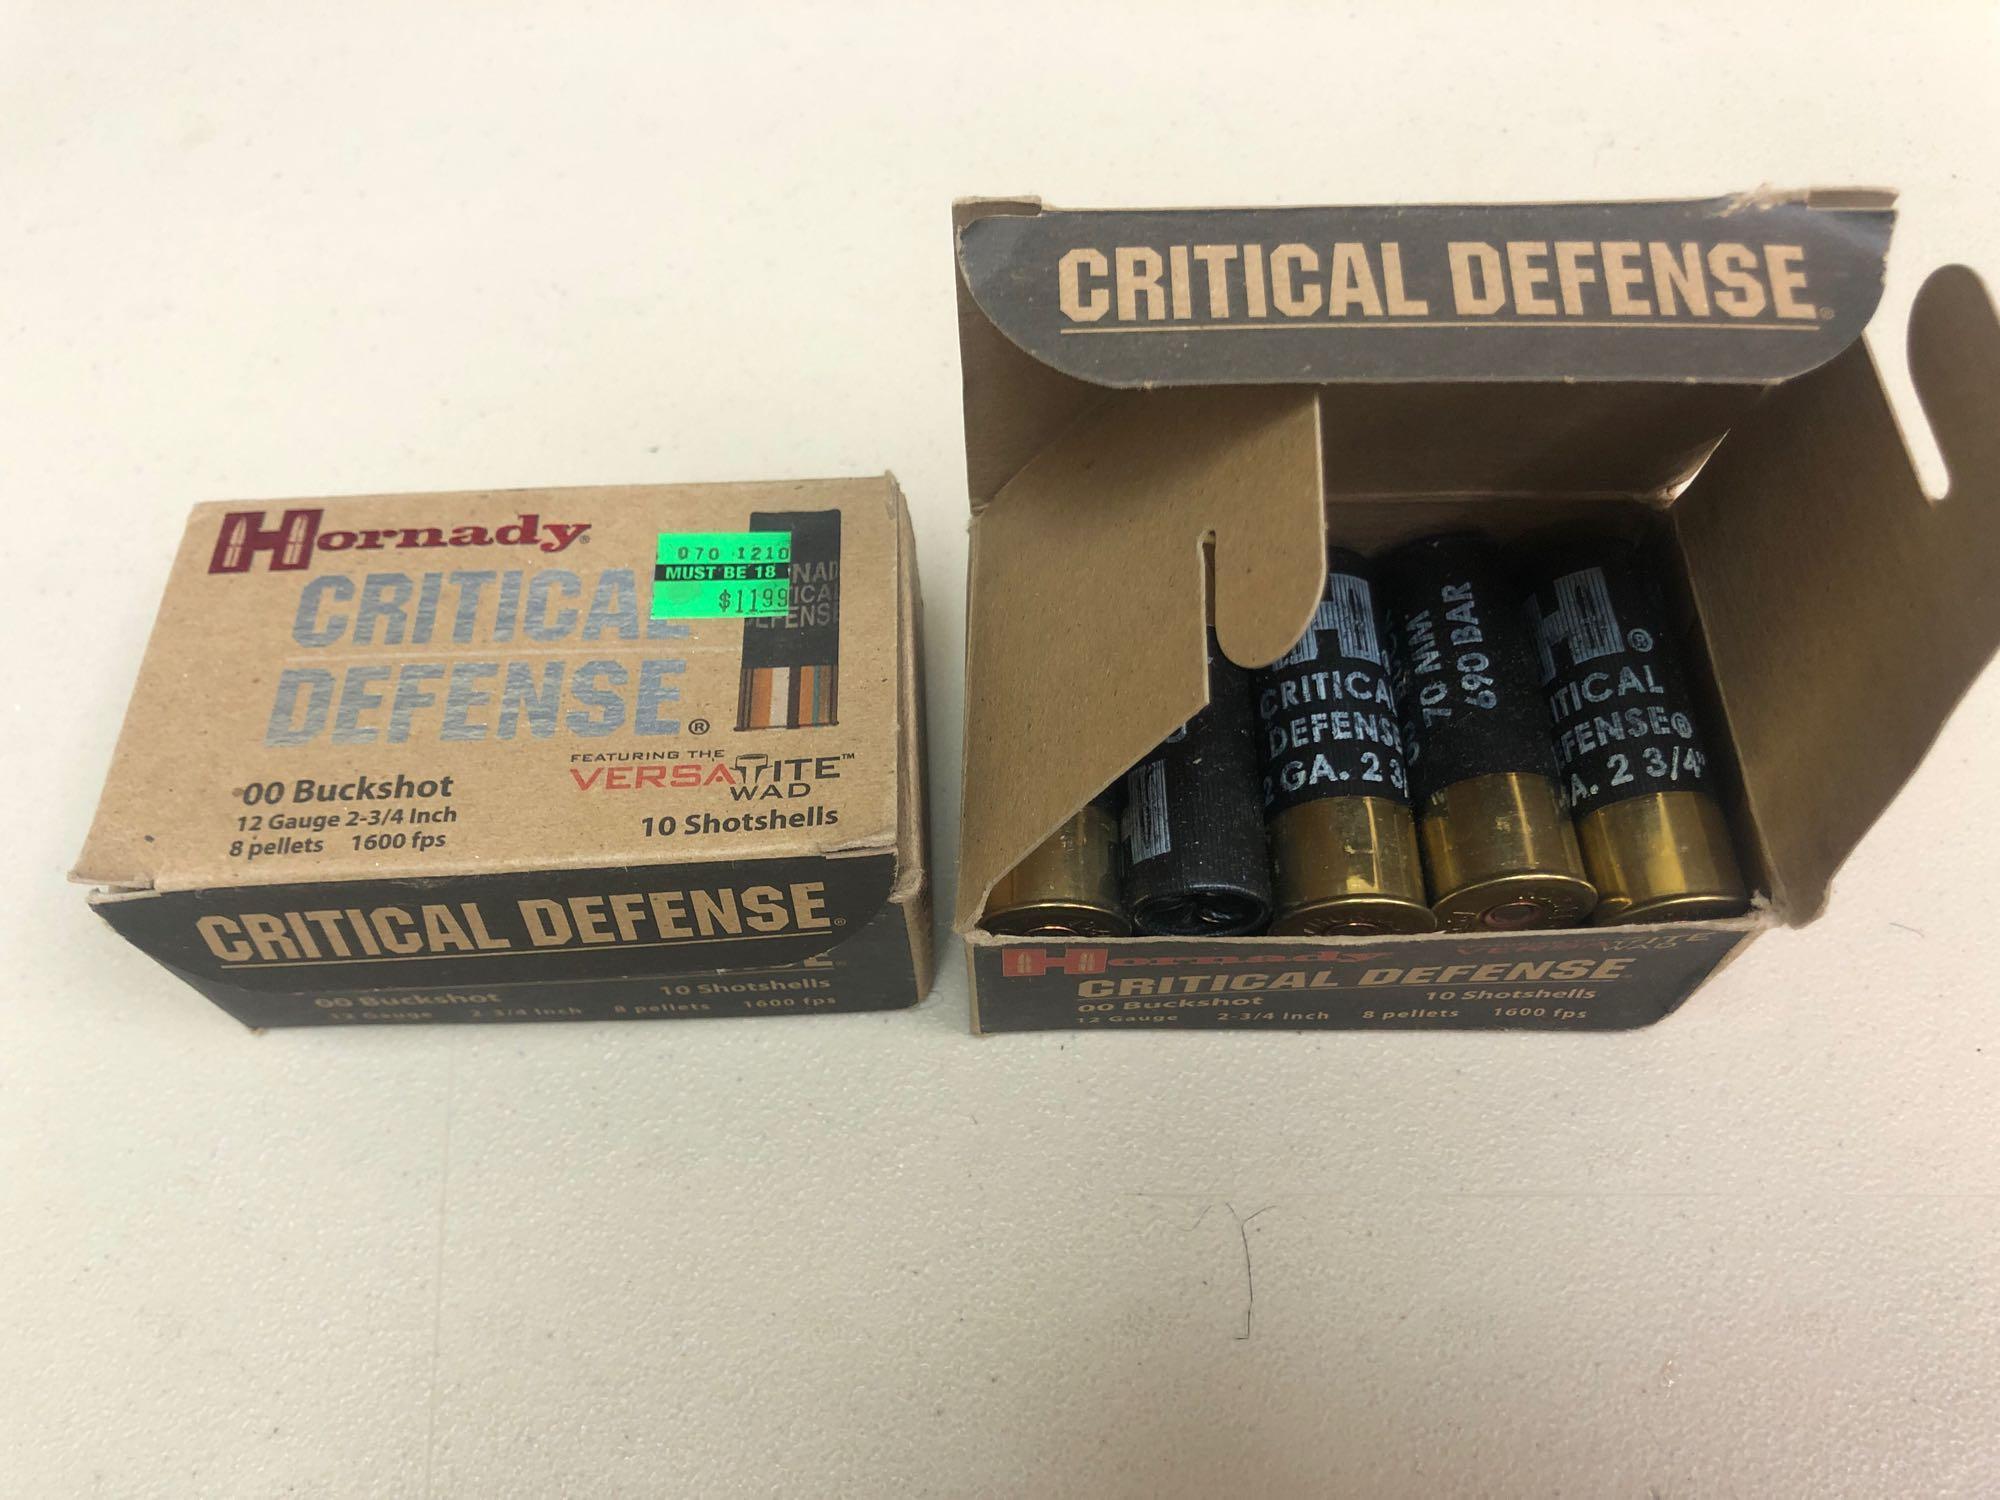 Various 410 ammo shells, (2) full boxes of 00 buck shot 12-gauge shells & (4) full boxes of 22 cal.